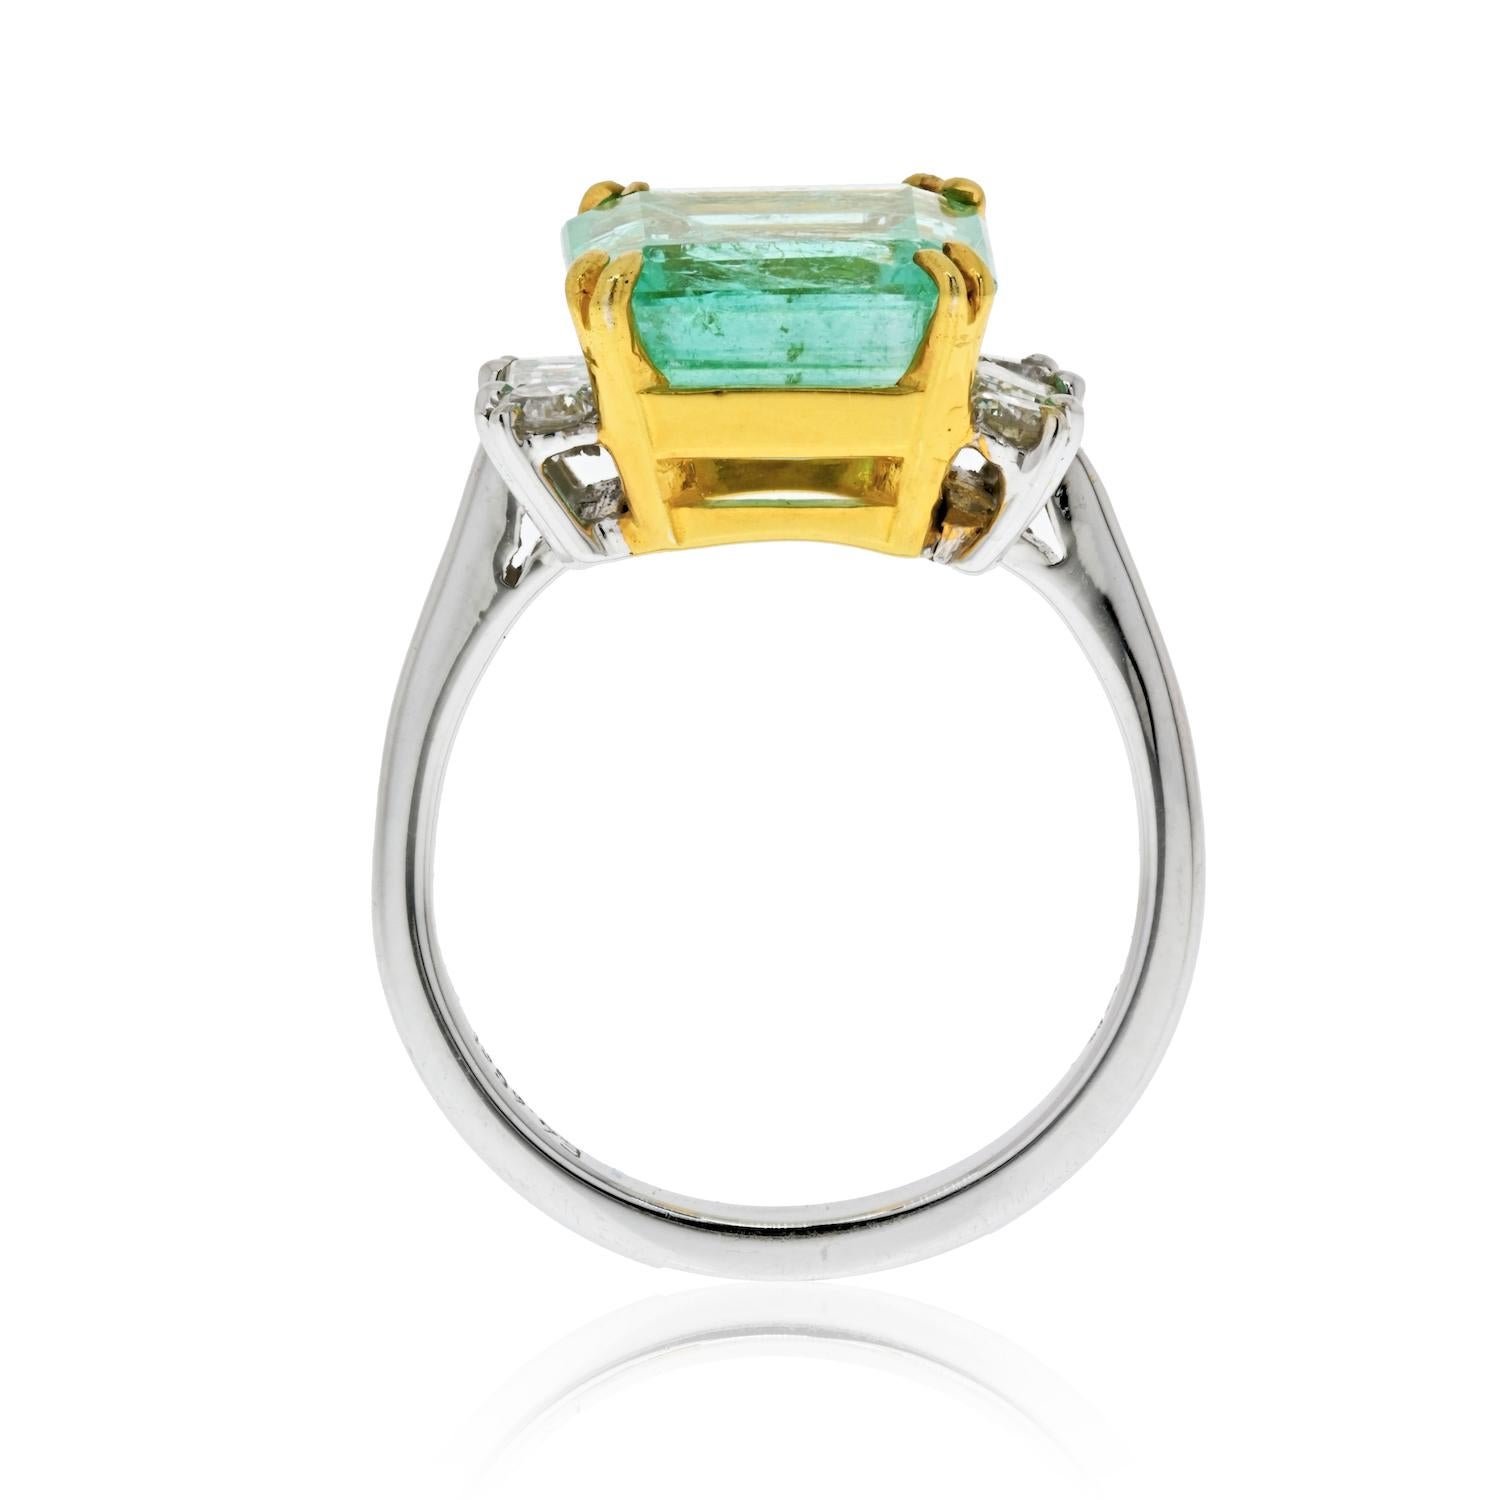 Emerald Cut 4.65 Carat Emerald-Cut Colombian Emerald and Diamond 18K Gold Ring